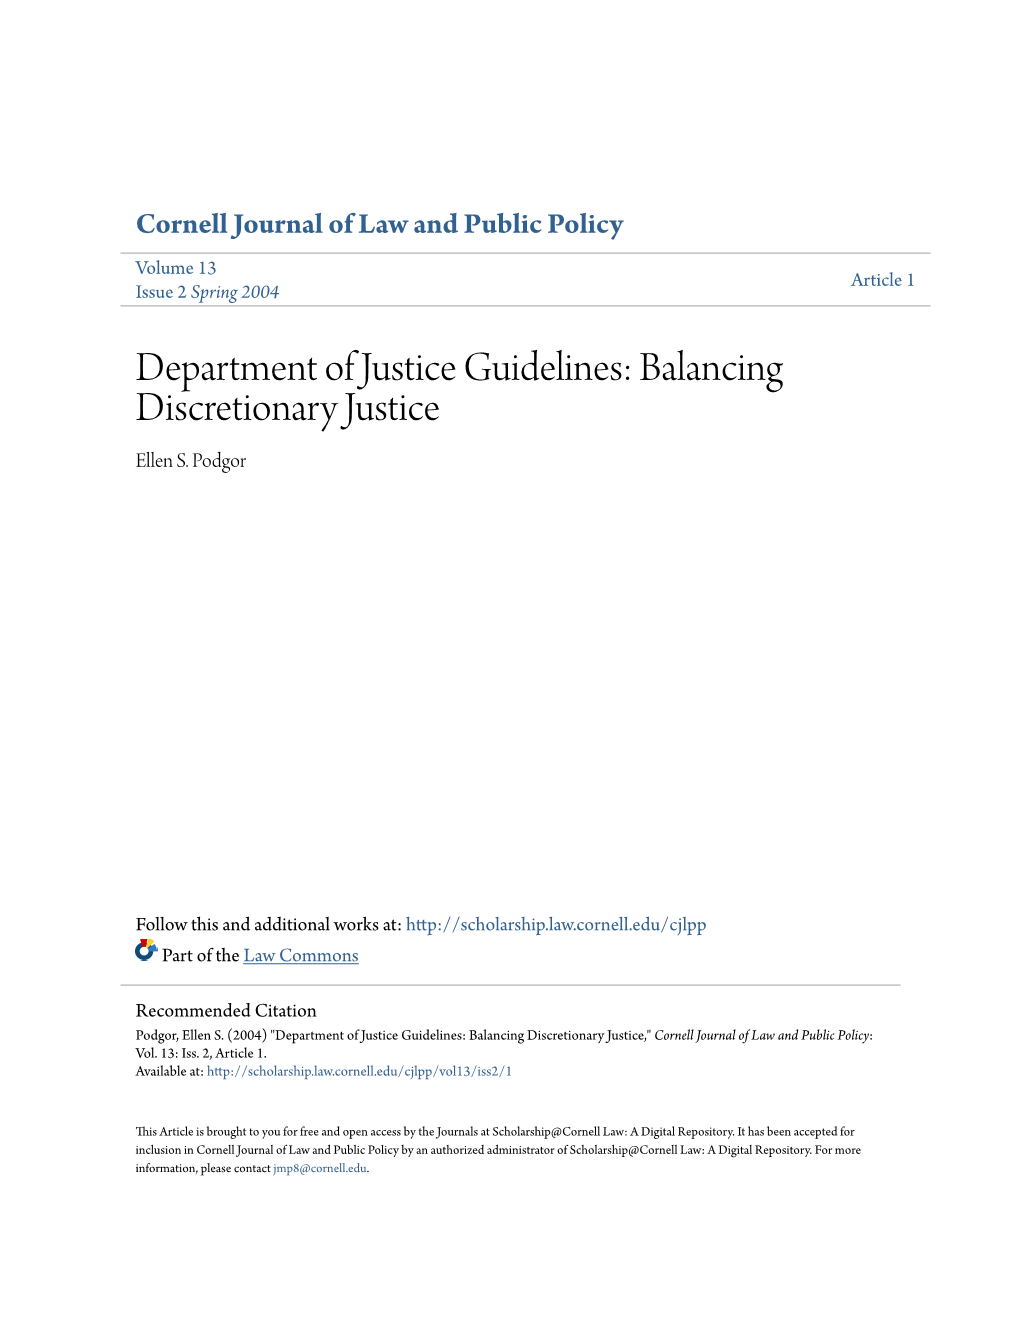 Department of Justice Guidelines: Balancing Discretionary Justice Ellen S